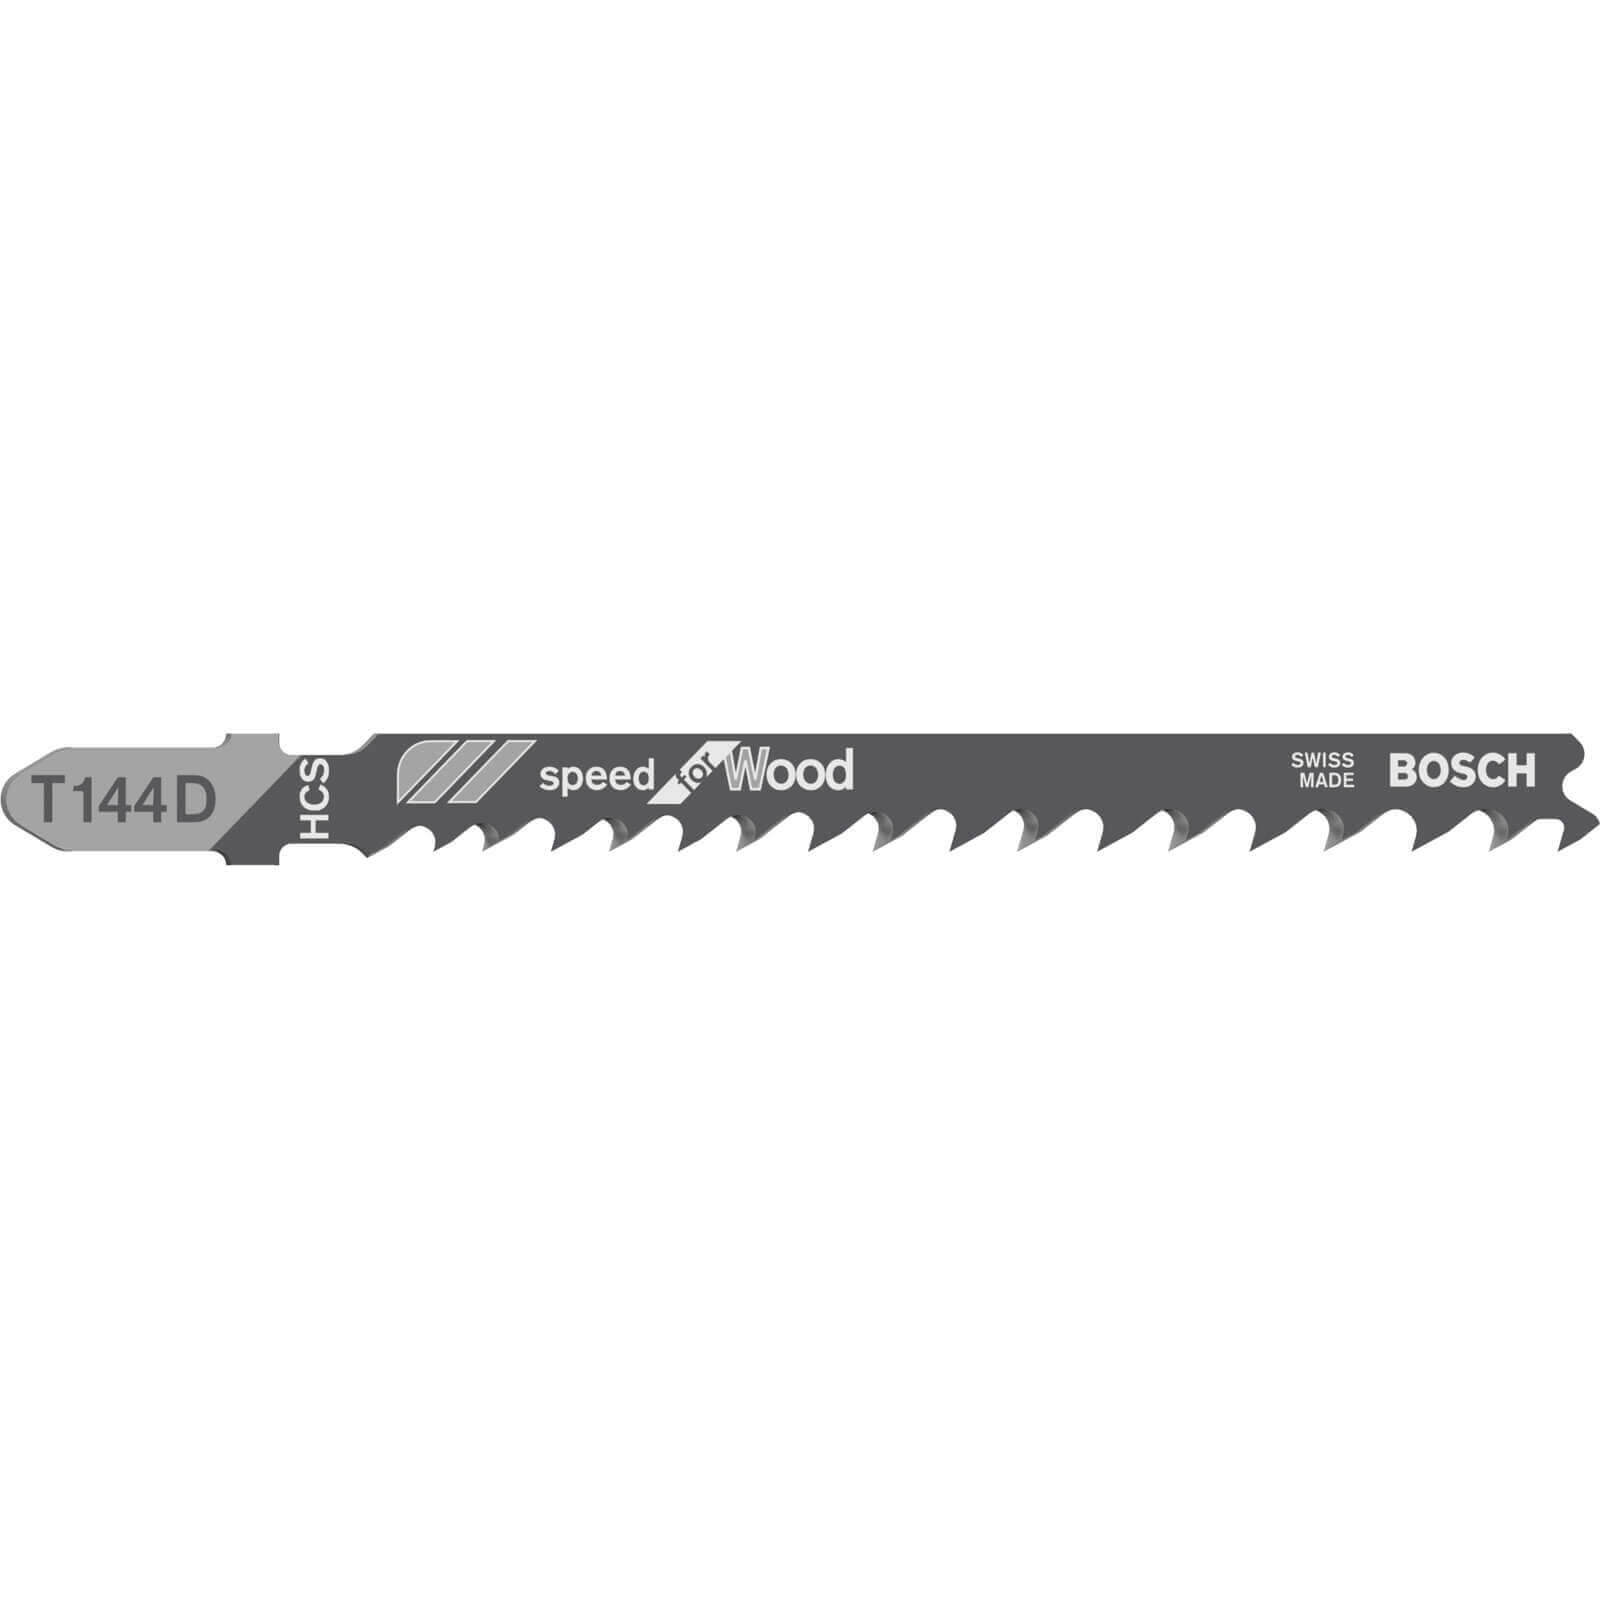 Photo of Bosch T144 D Wood Cutting Jigsaw Blades Pack Of 25